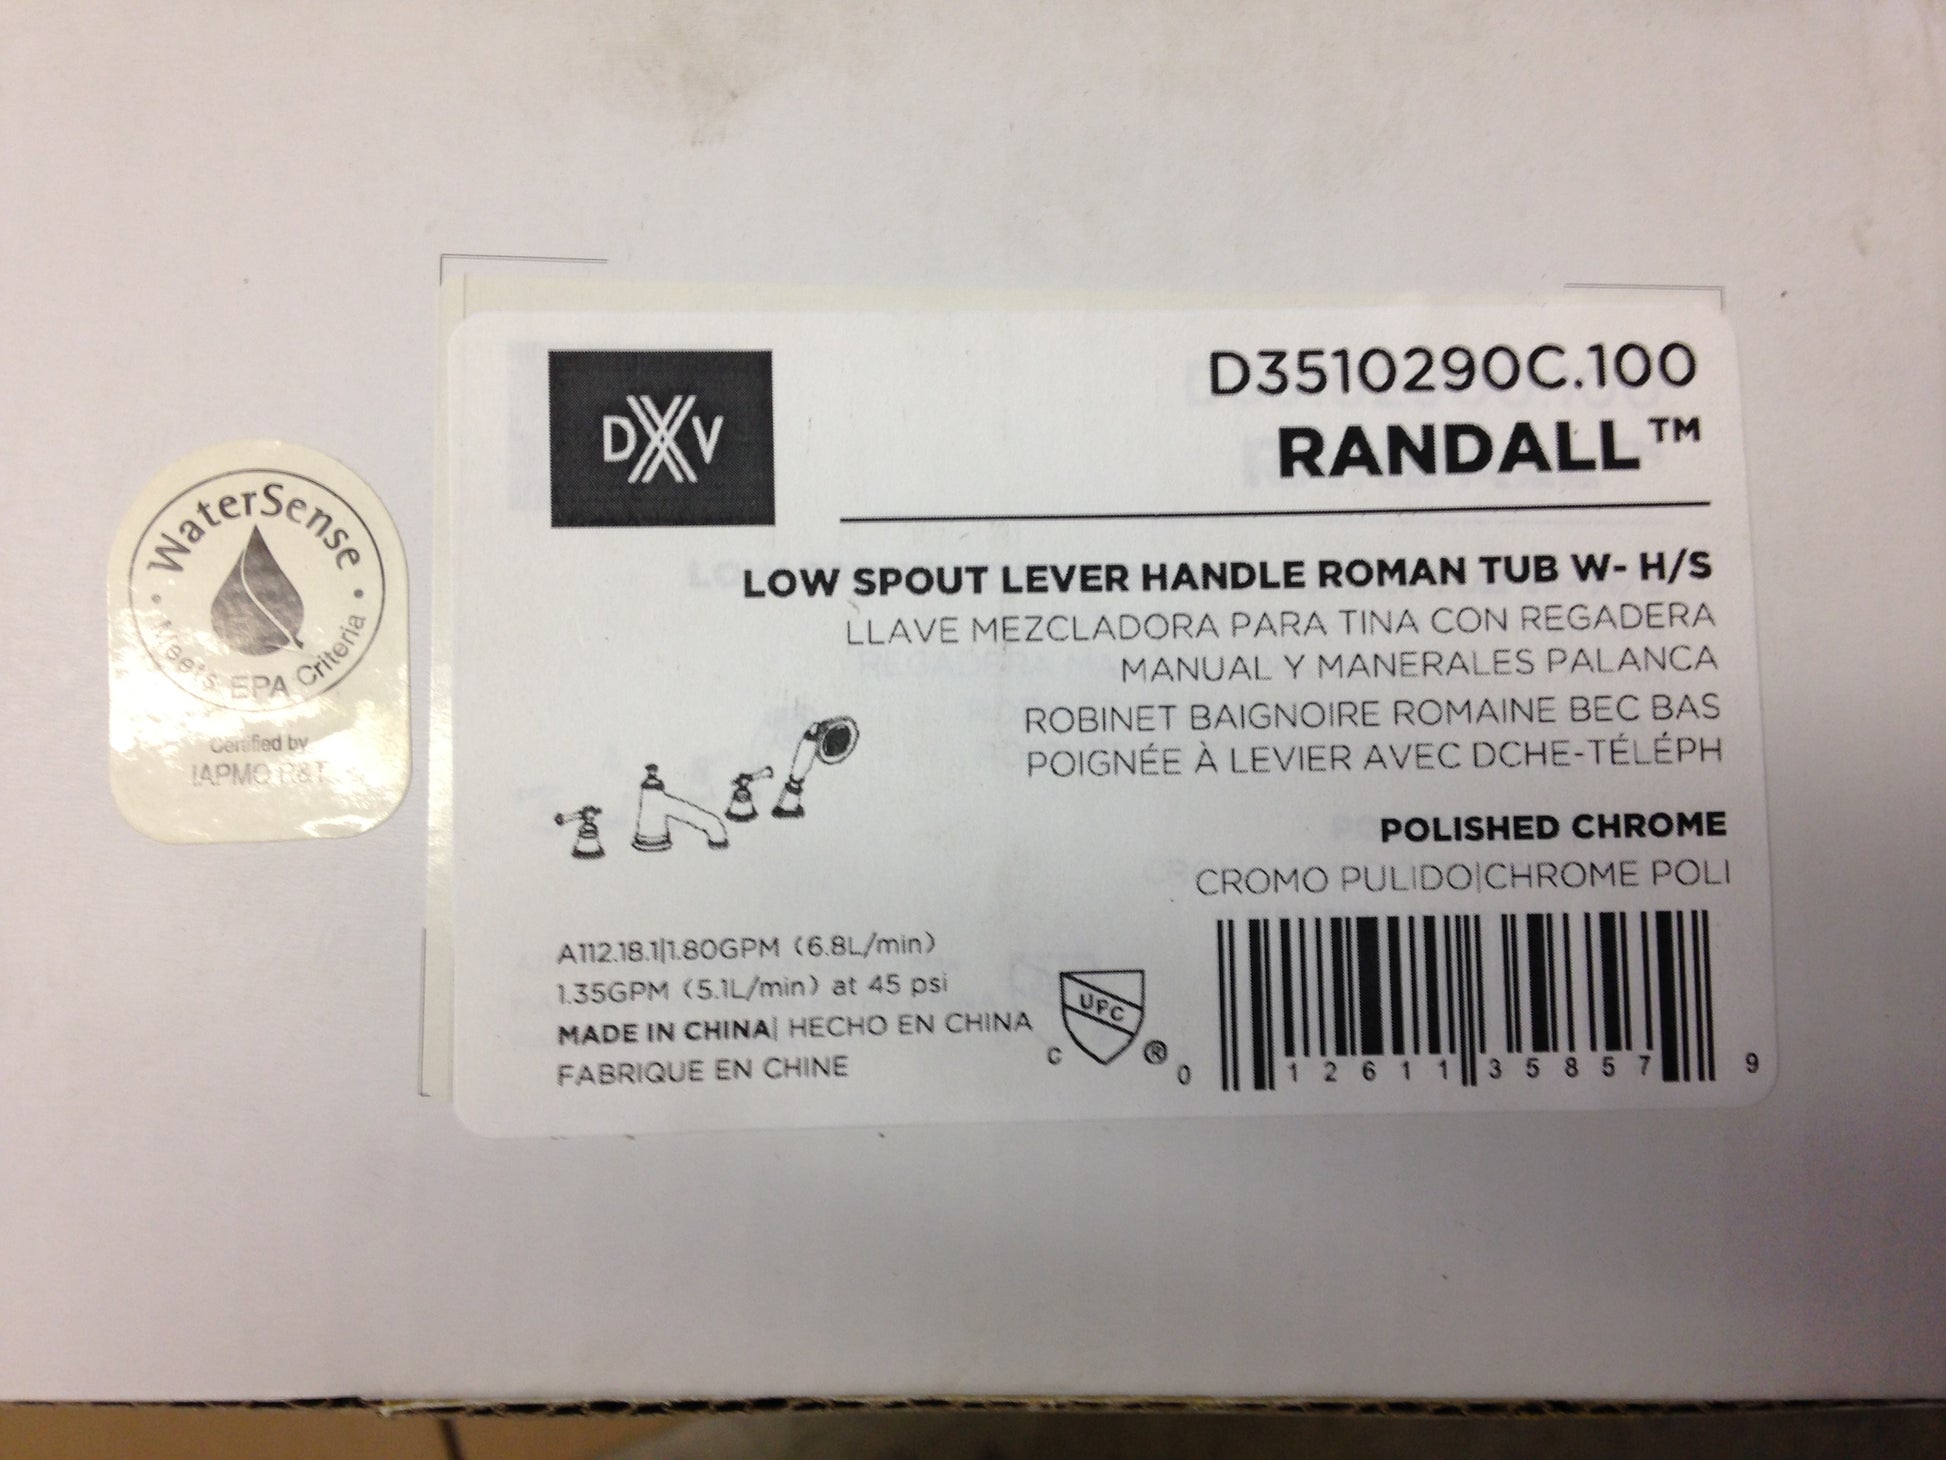 "RANDALL" LOW SPOUT LEVER HANDLE ROMAN TUB W-H/S, POLISHED CHROME